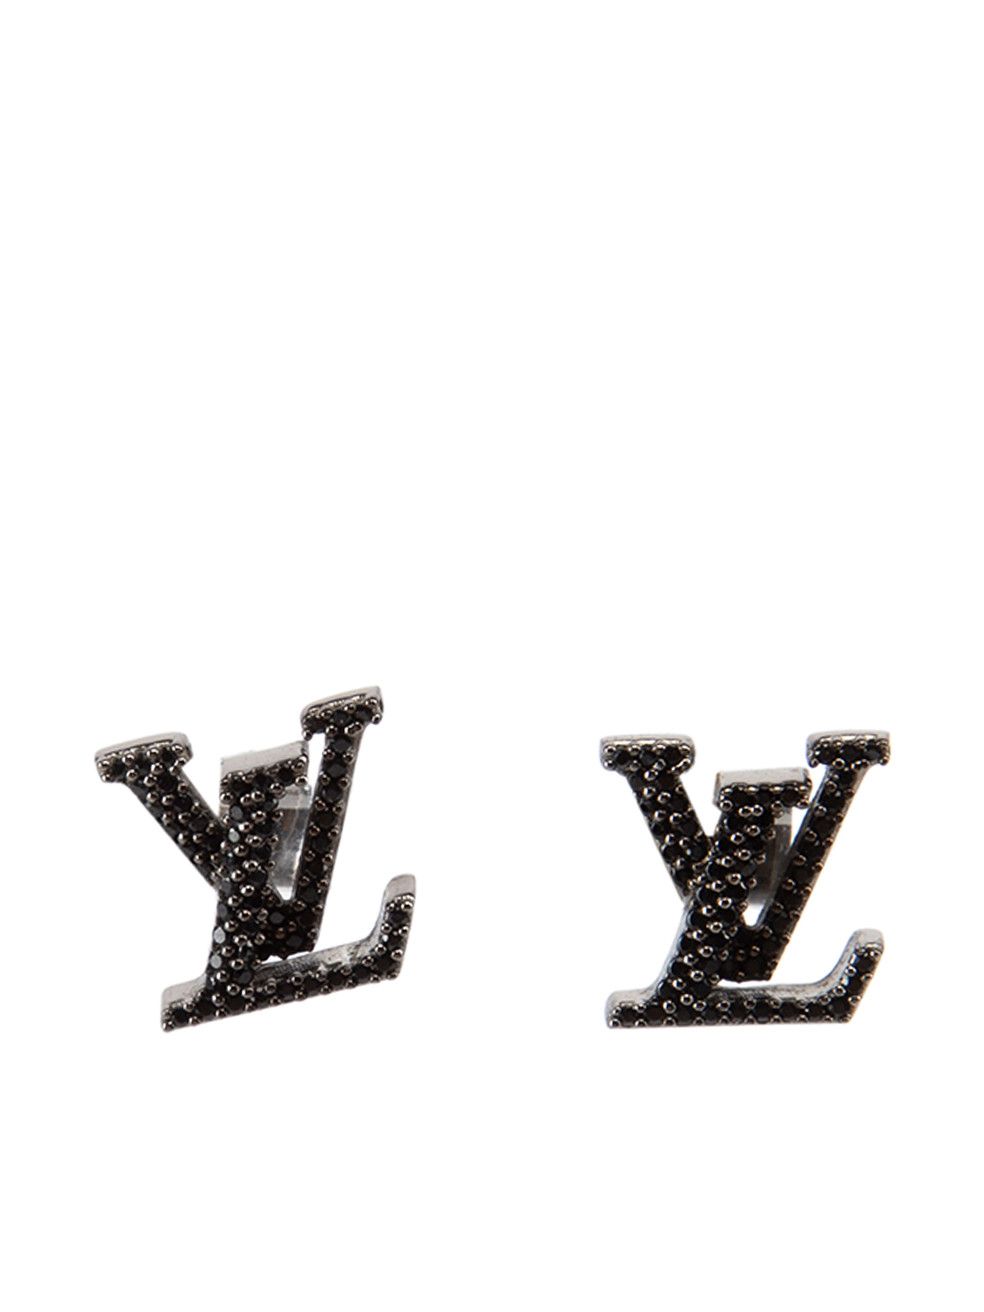 Shop Louis Vuitton Essential v stud earrings (M68153, M63208) by